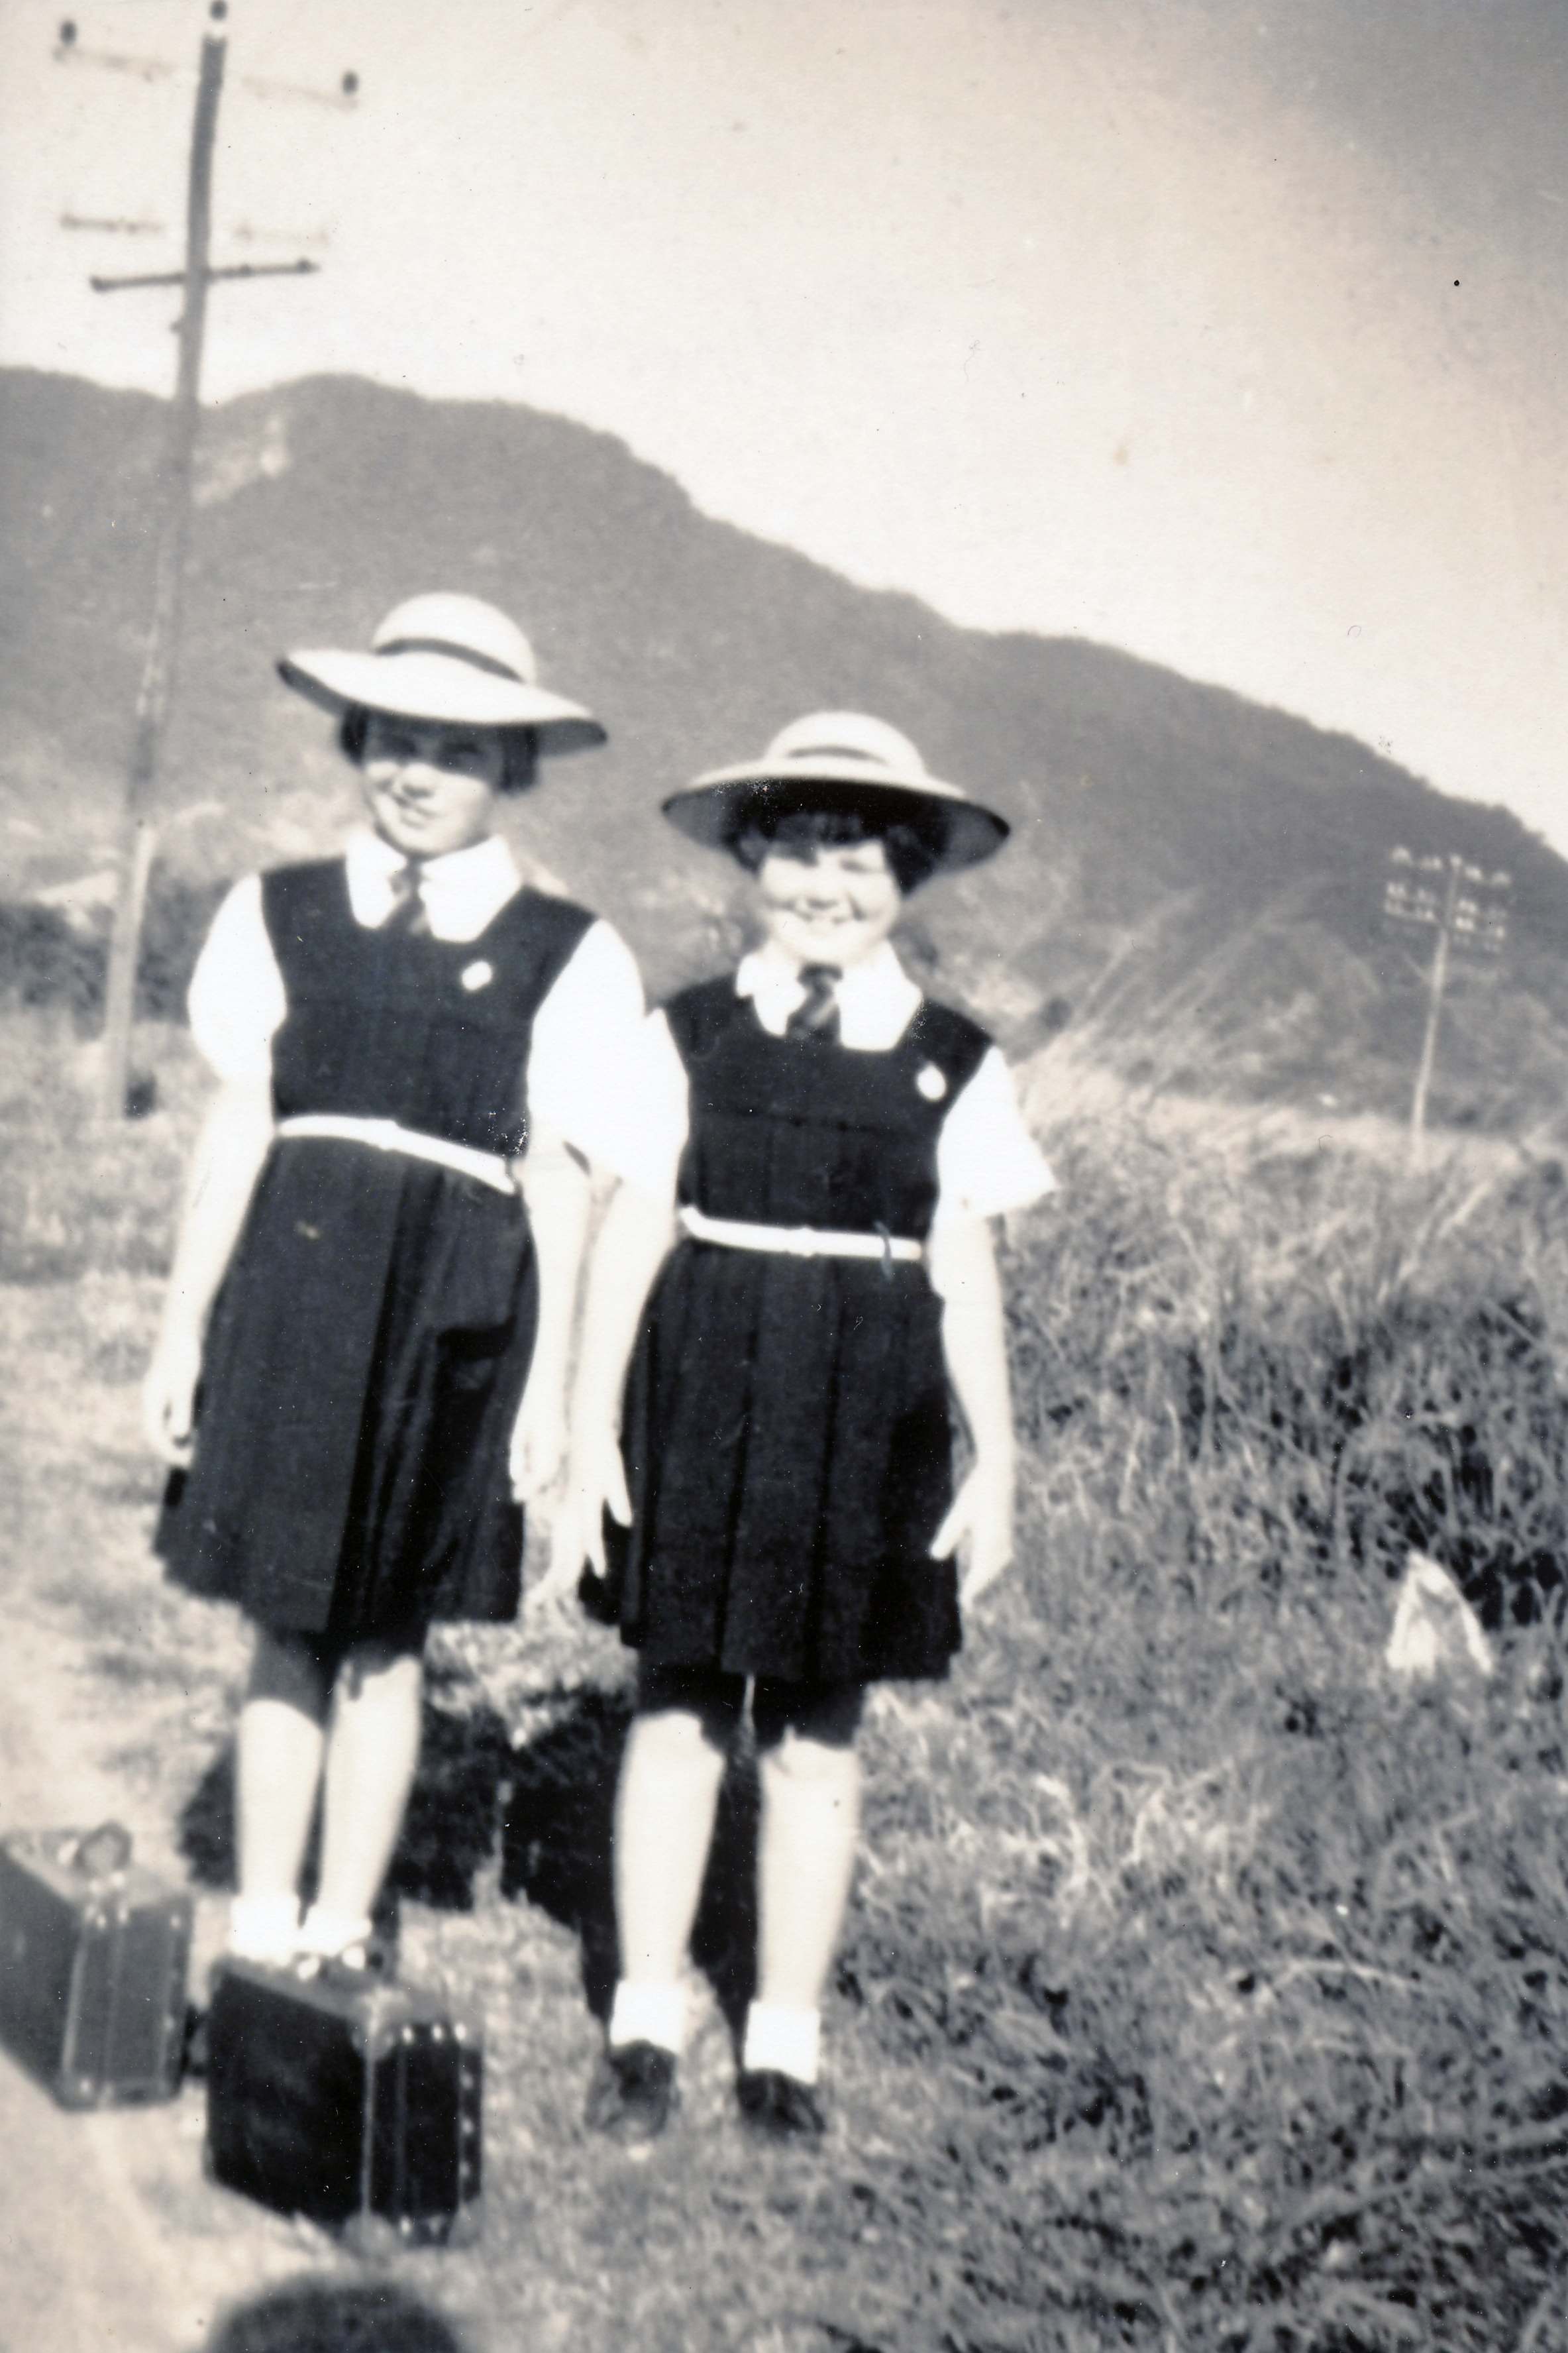 1955 Gertrude and Helen Schneider